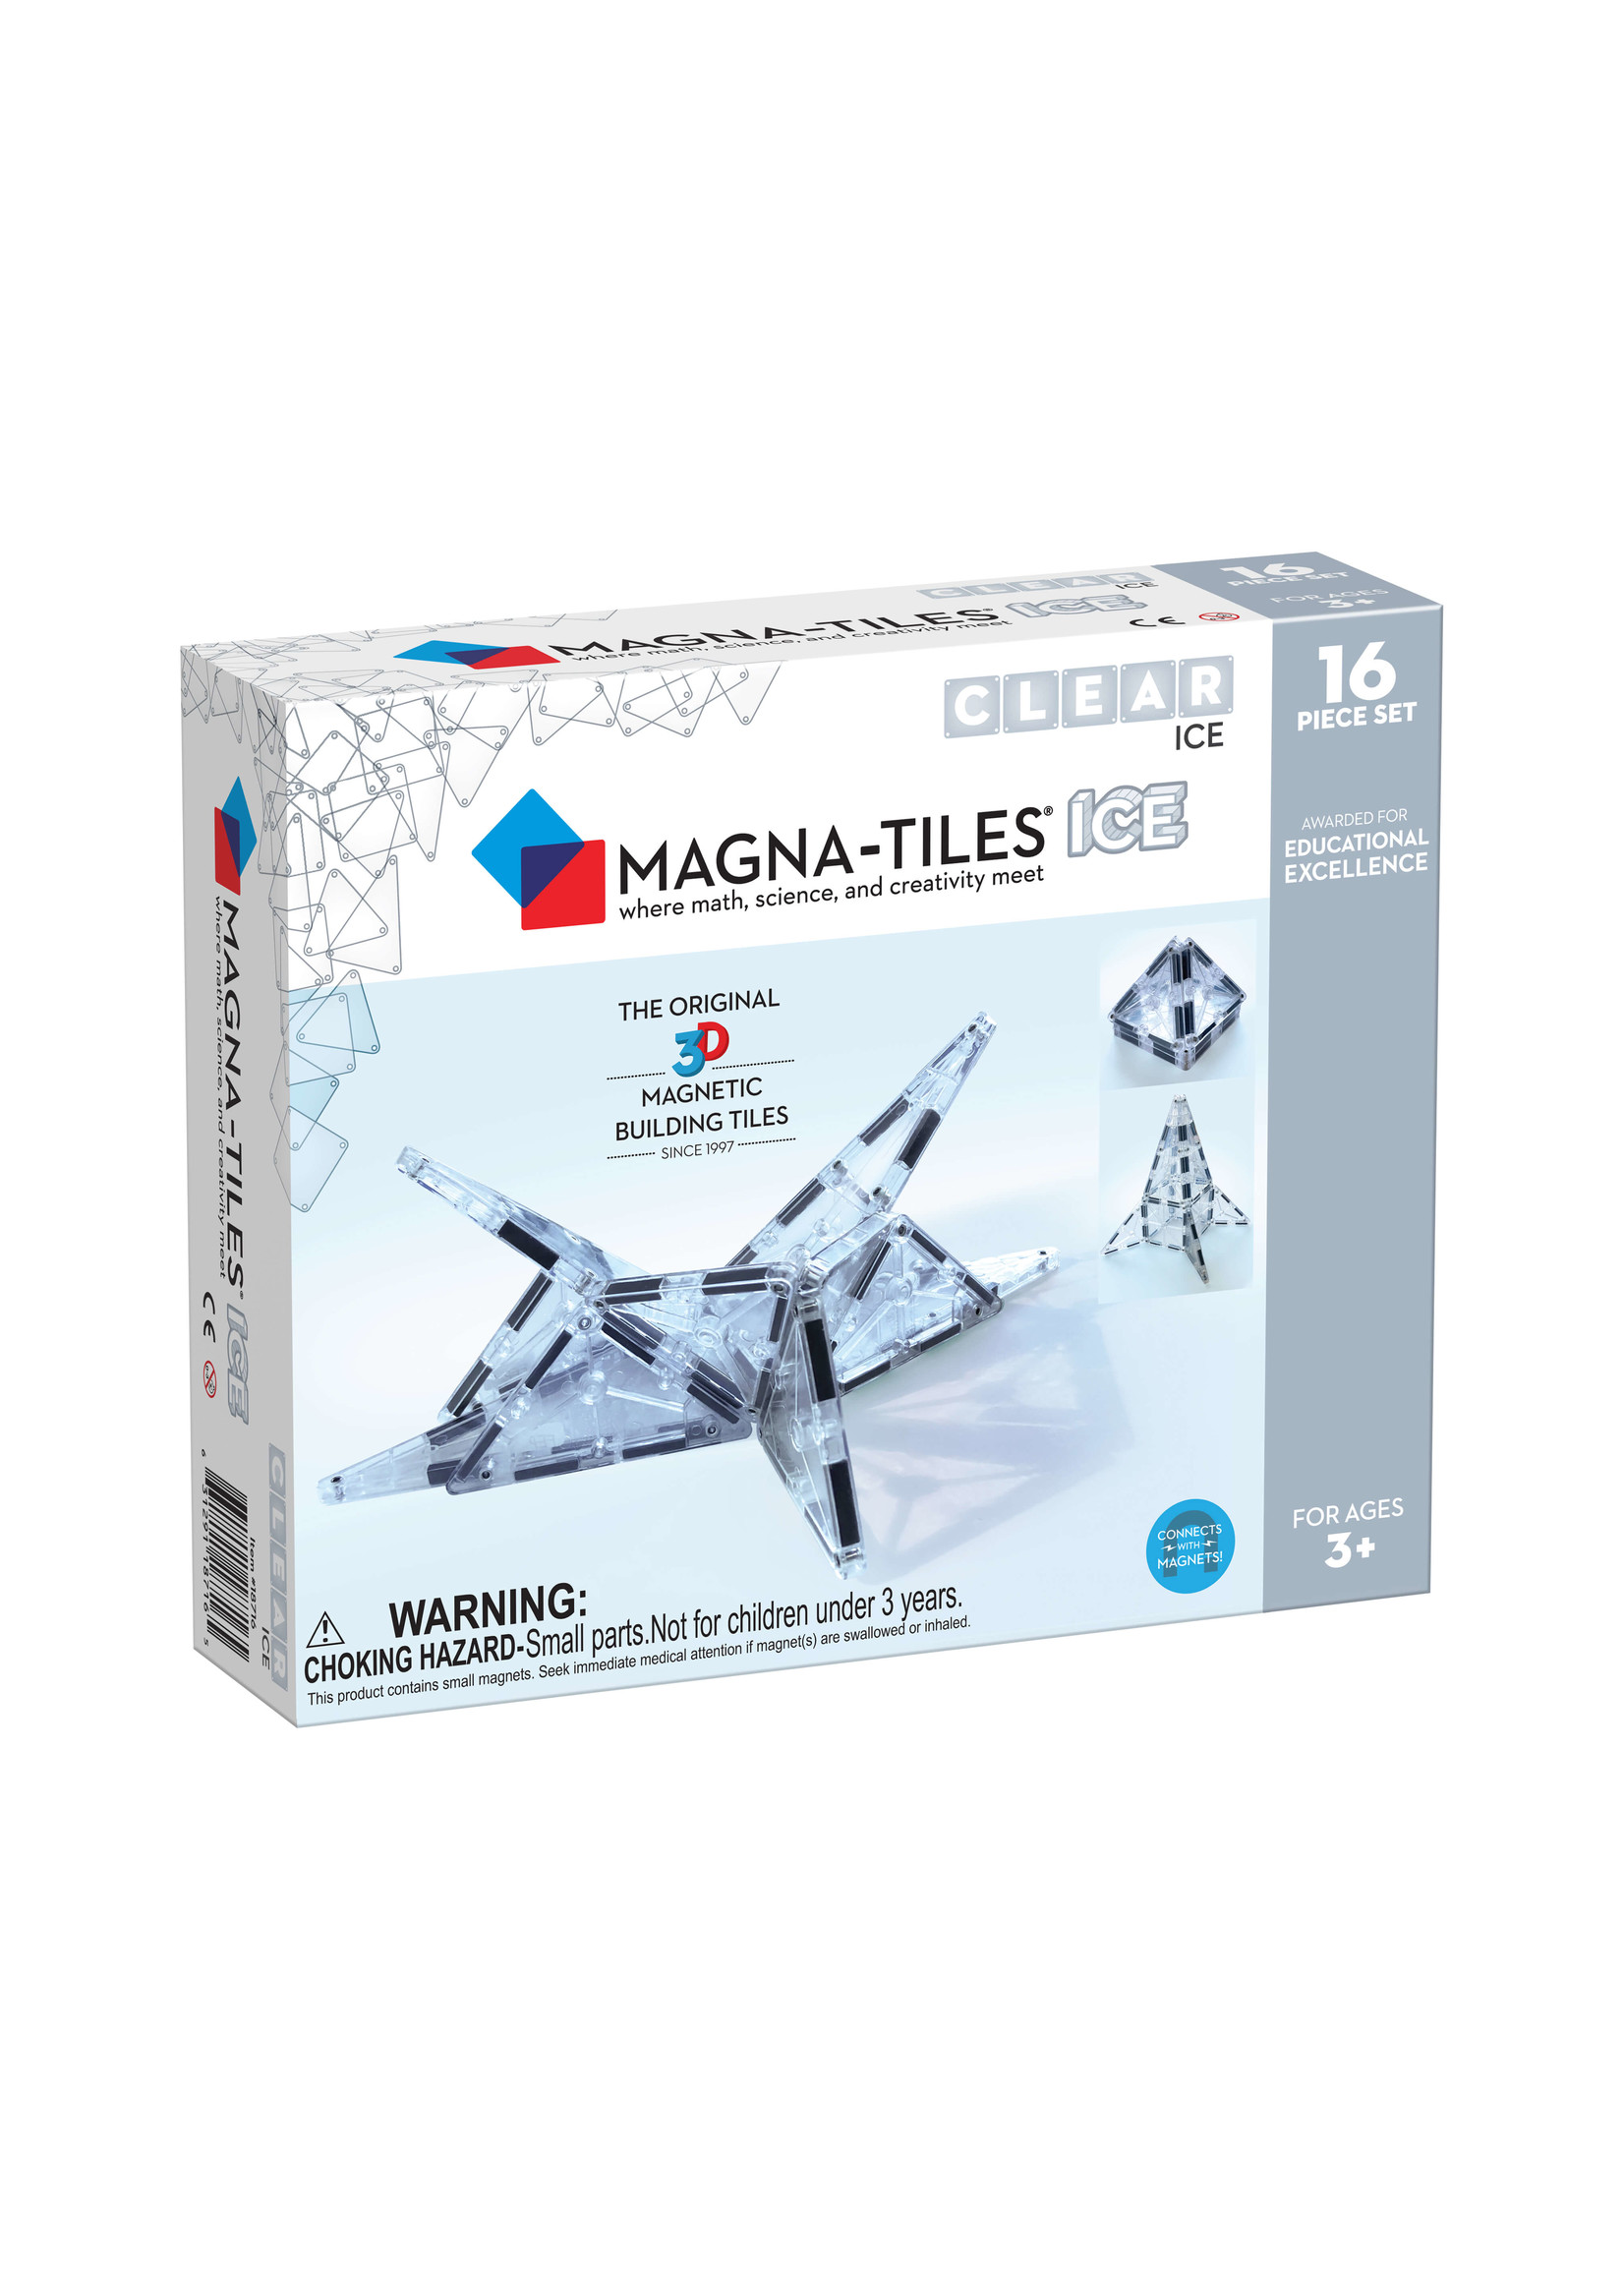 Valtech Magna-Tiles® ICE 16-Piece Set